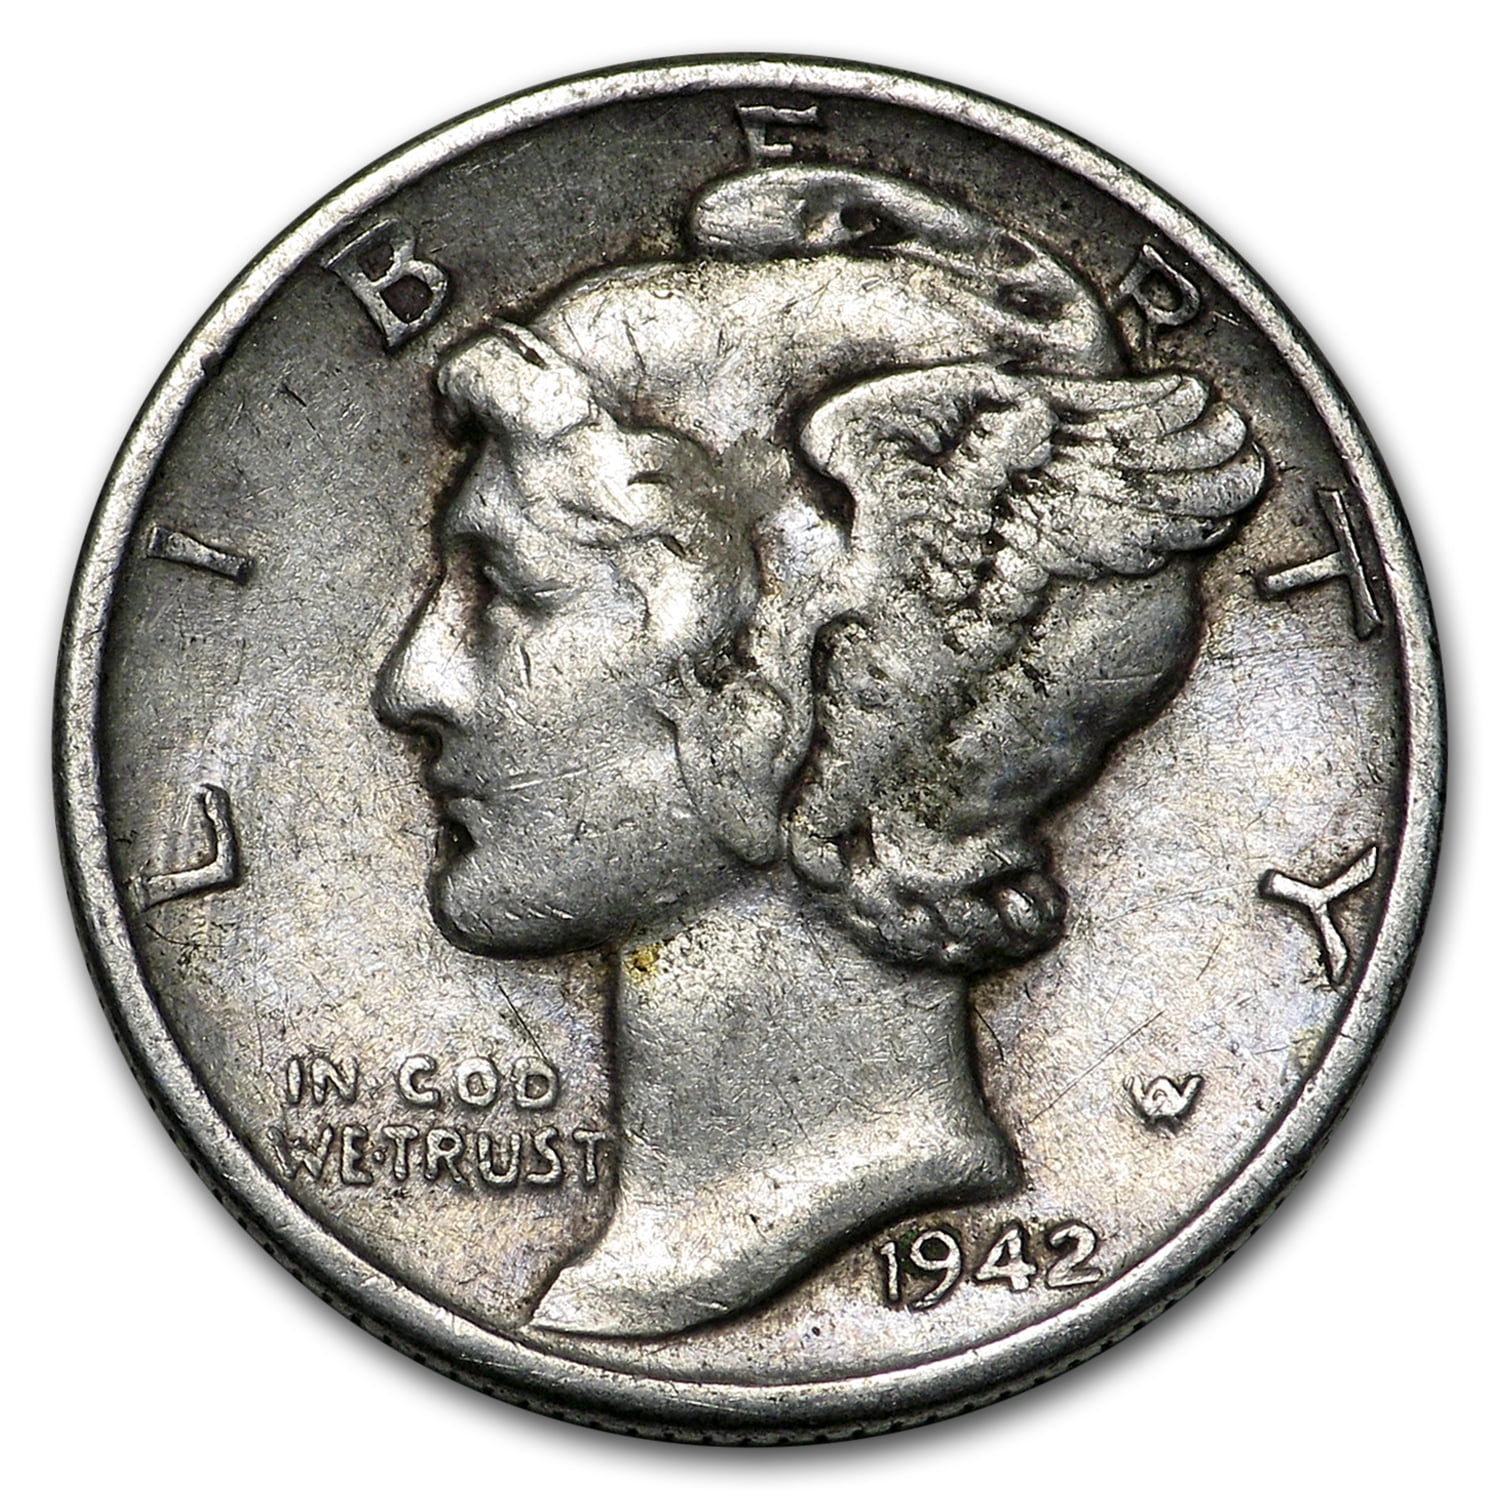 1942 mercury dime mint mark